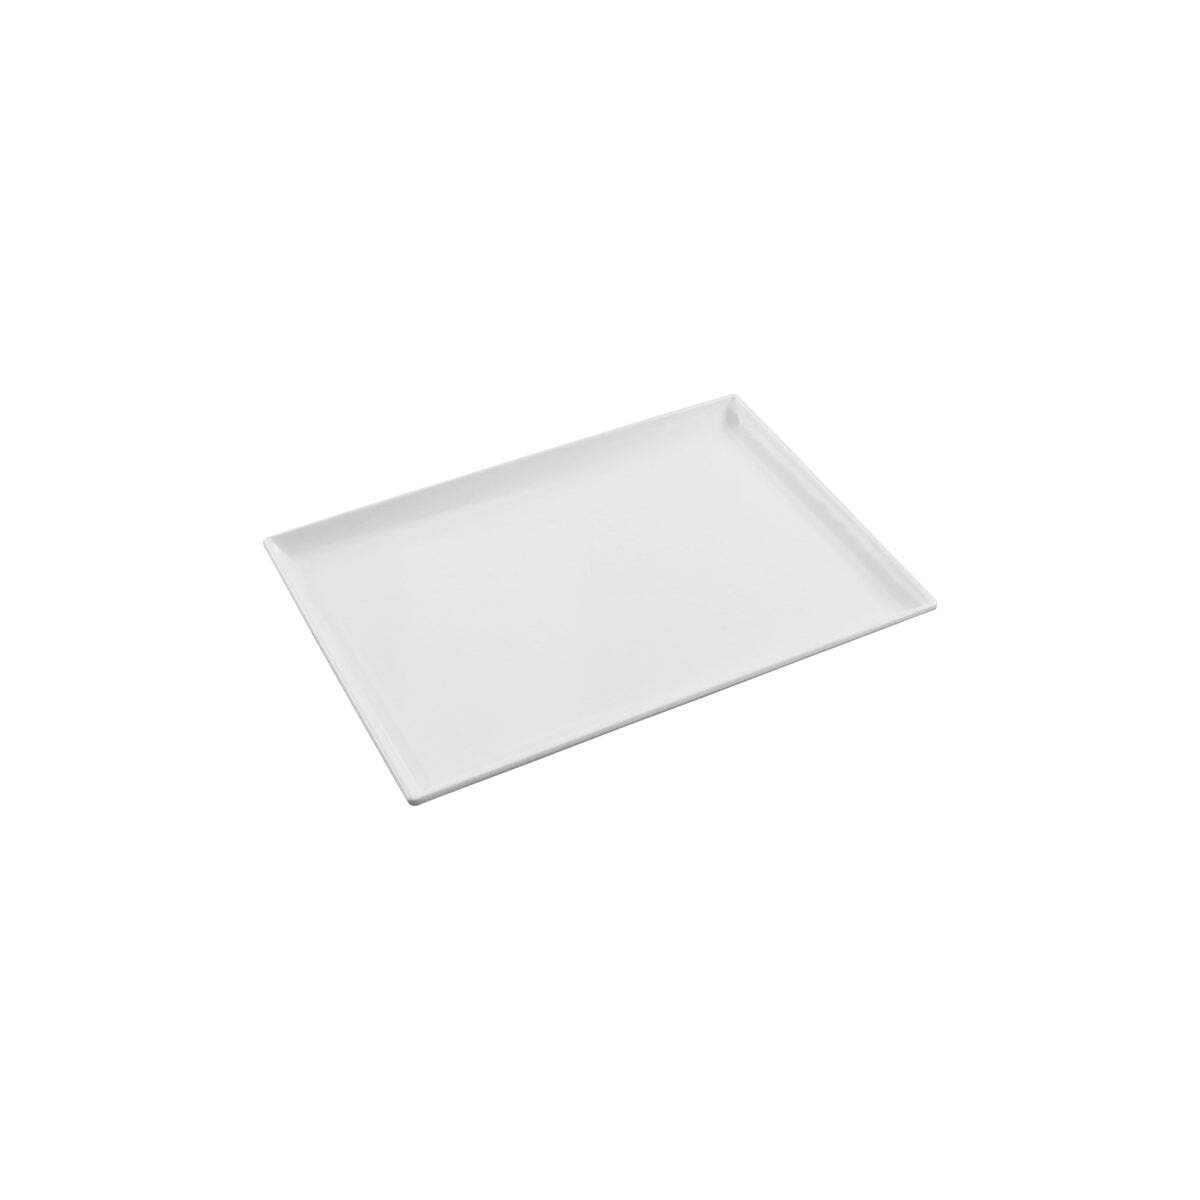 Superware Rectangular Platter 300 x200mm